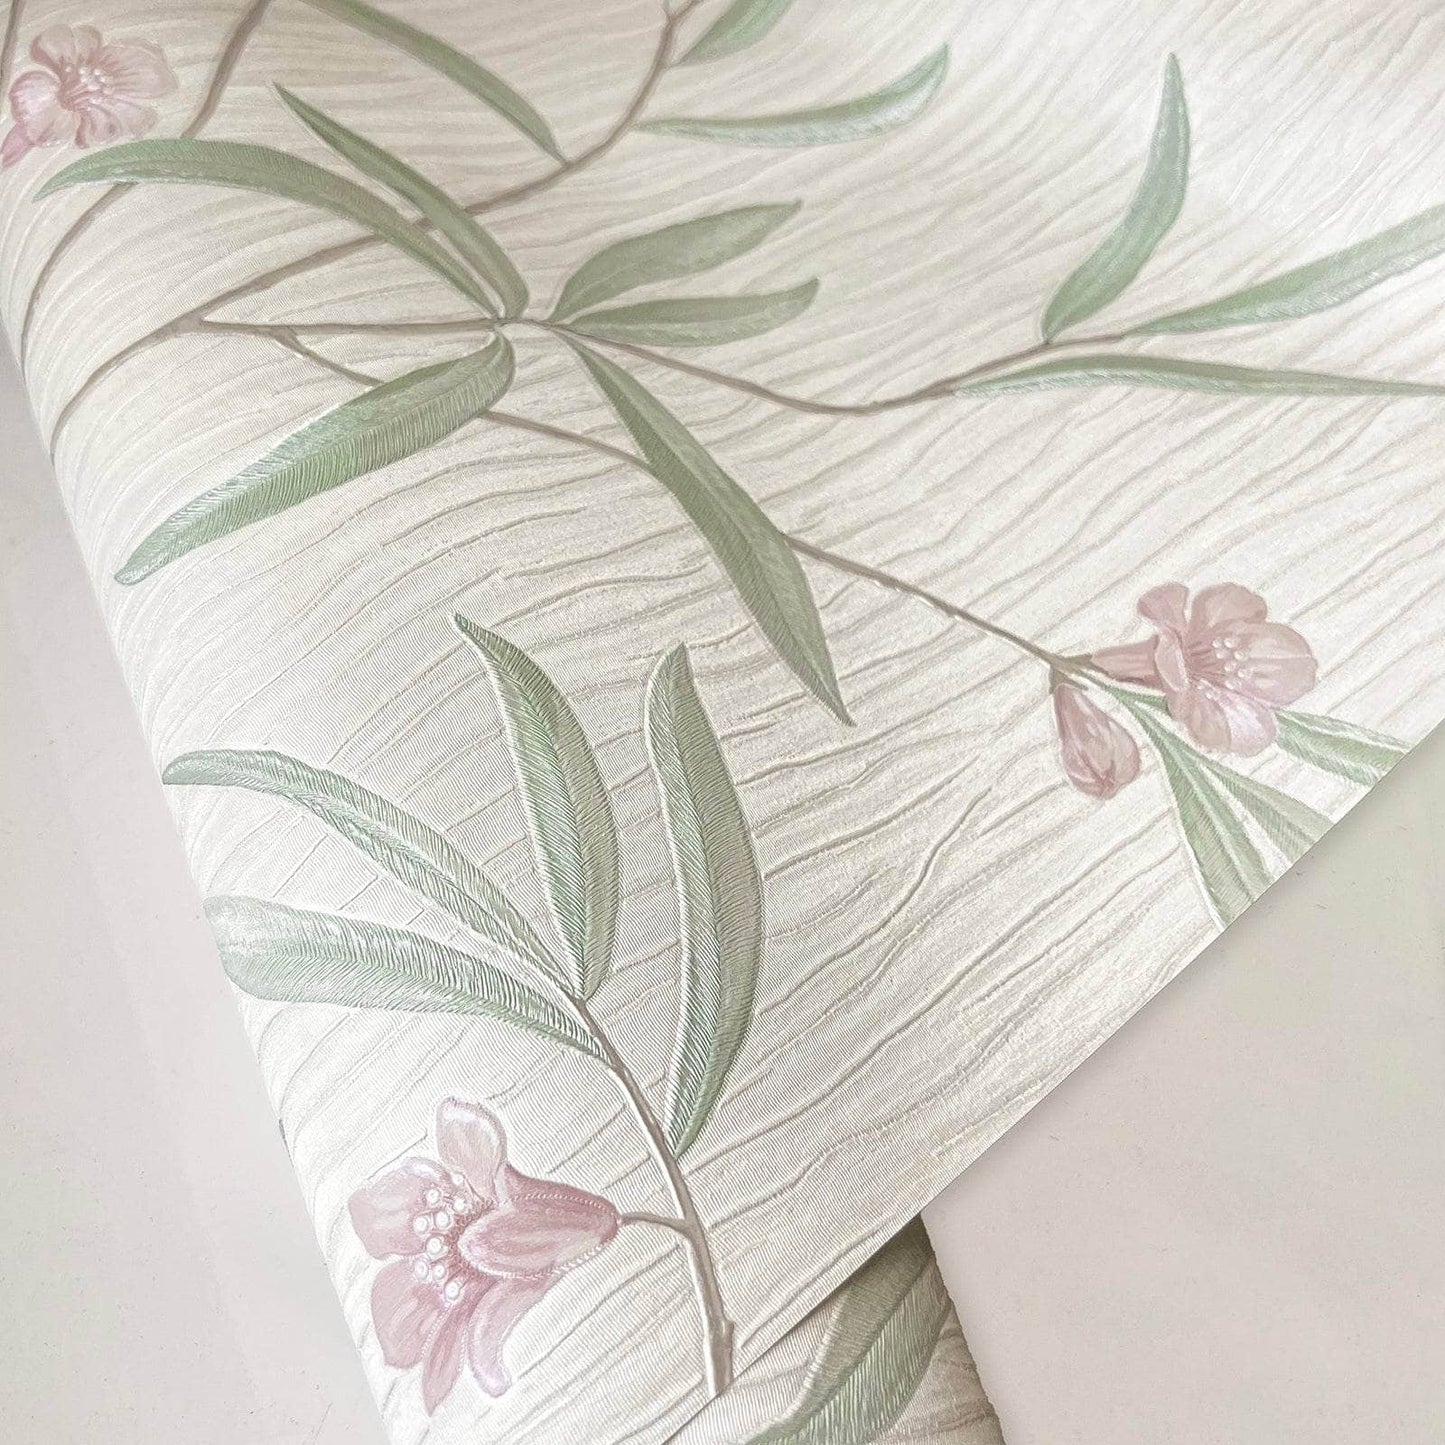 Wallpaper  -  Belgravia Tiffany Floral White, Sage & Heather Wallpaper - 41331  -  60009419